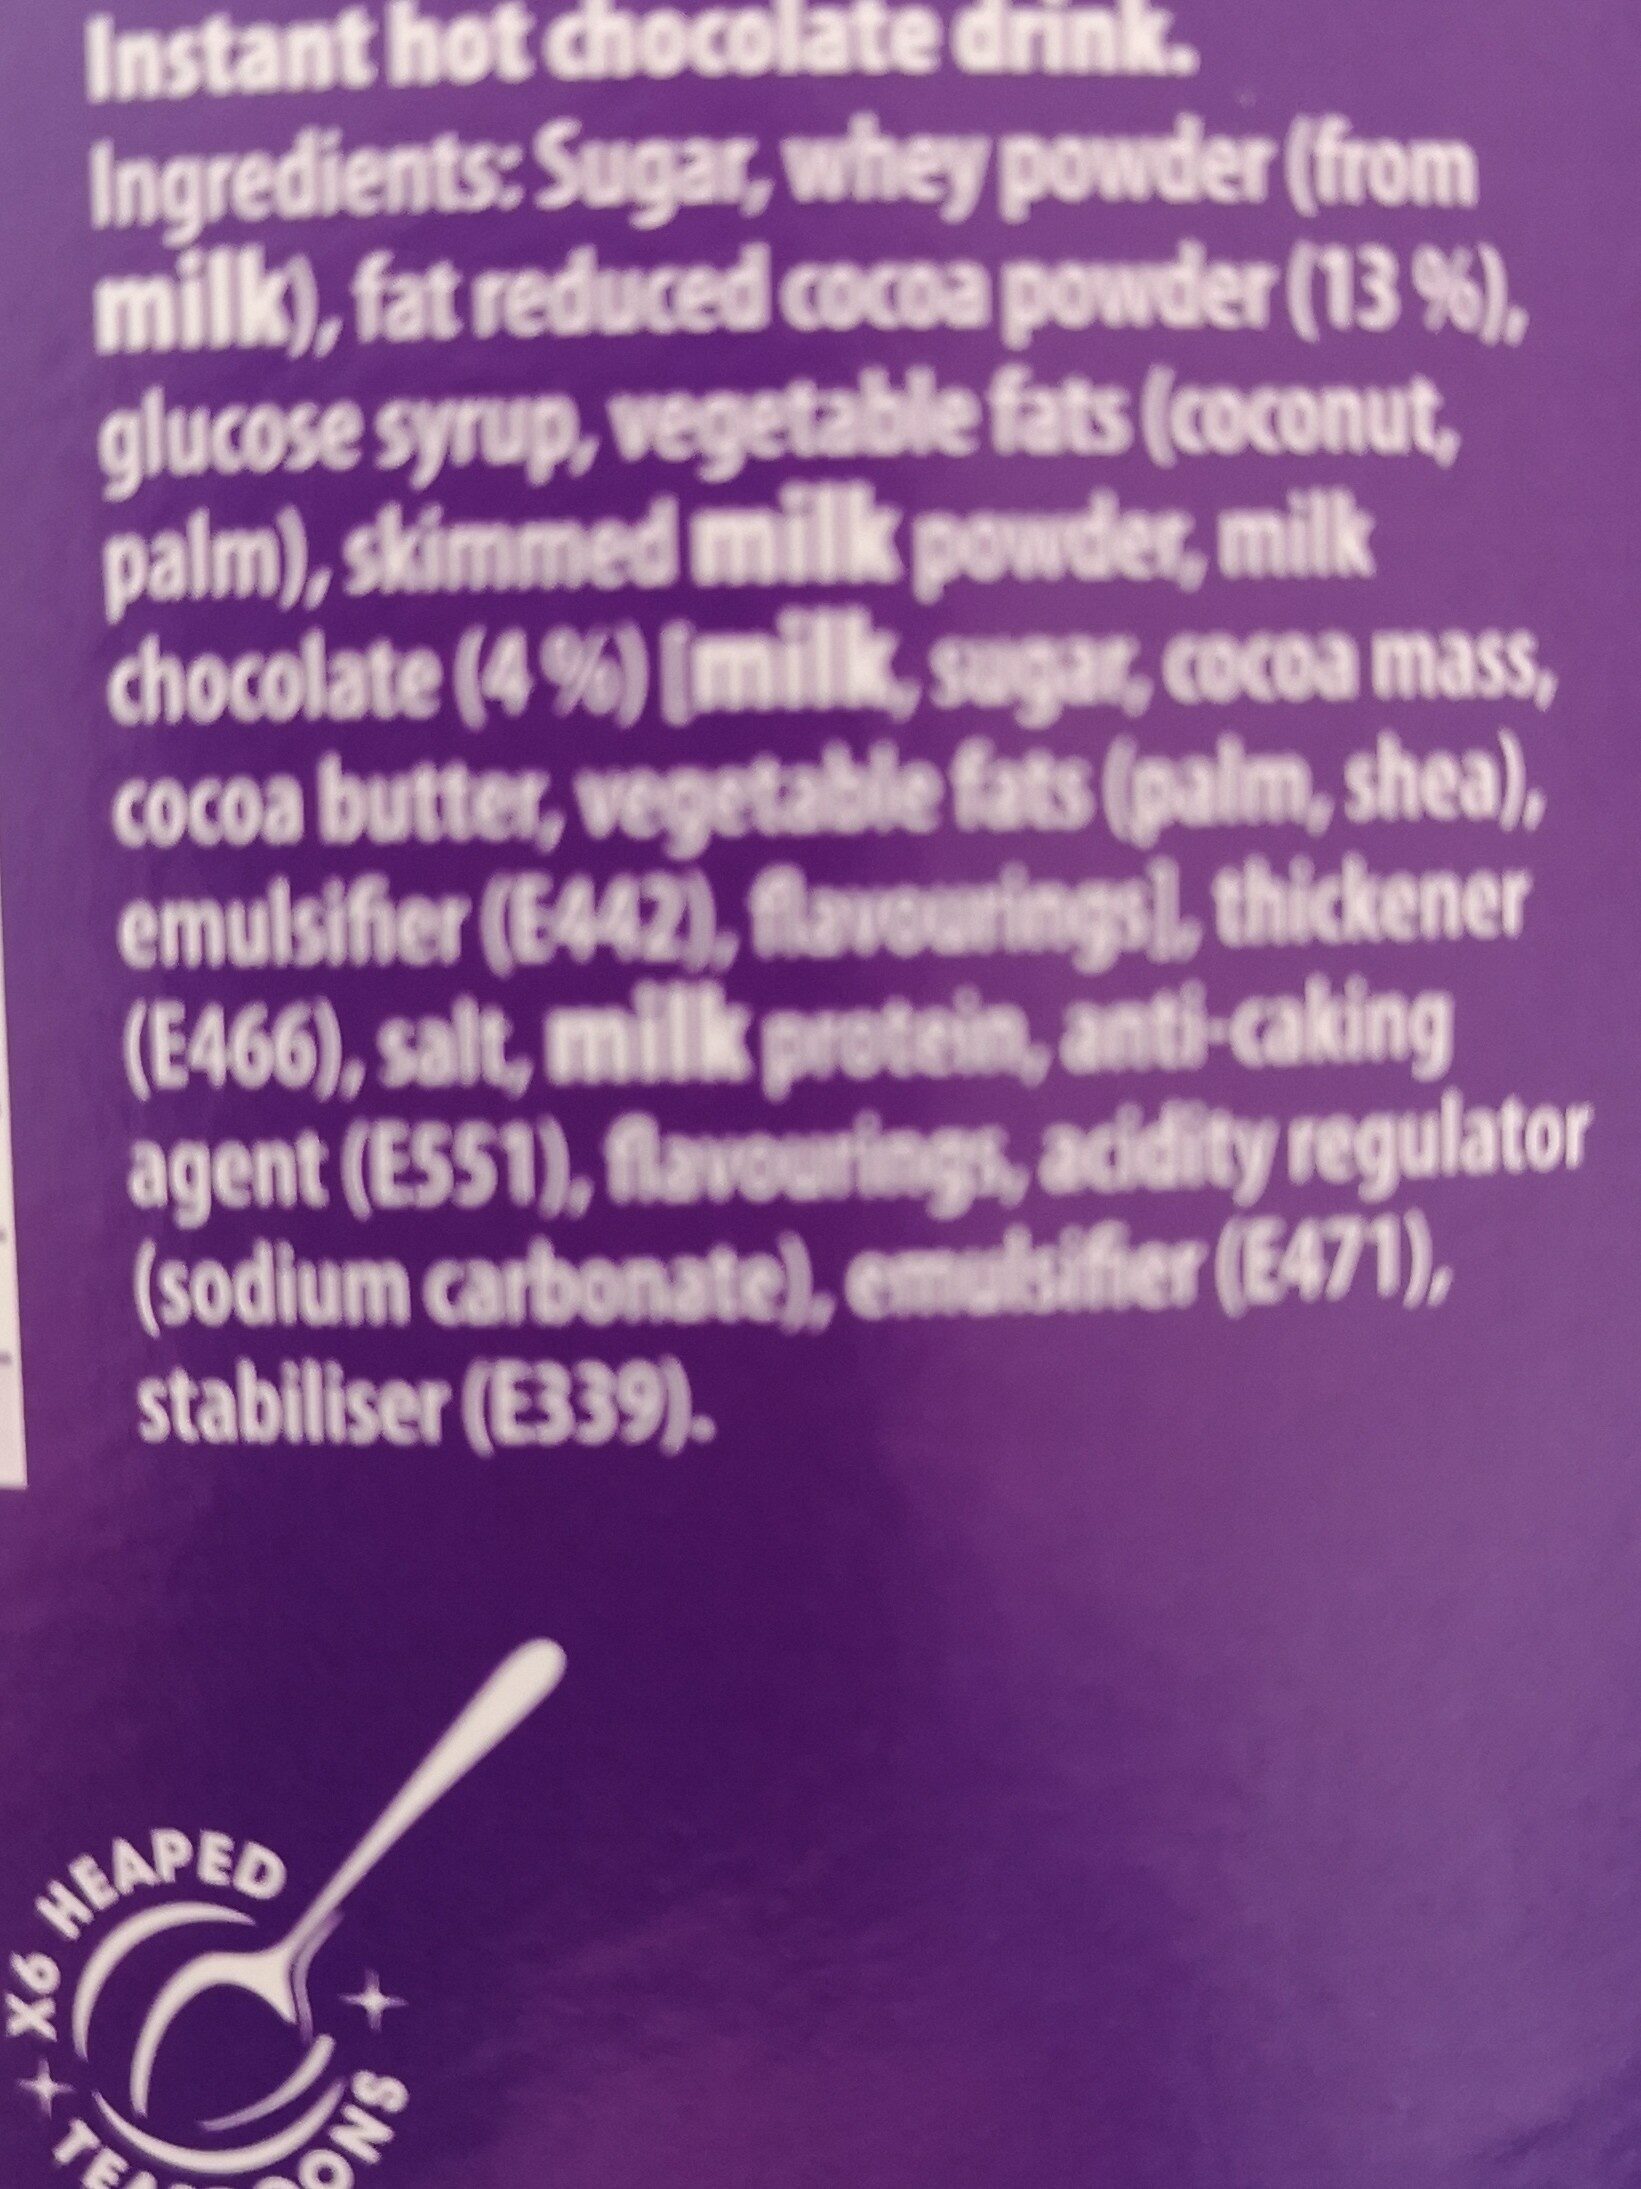 Cadbury hot chocolate - Ingredients